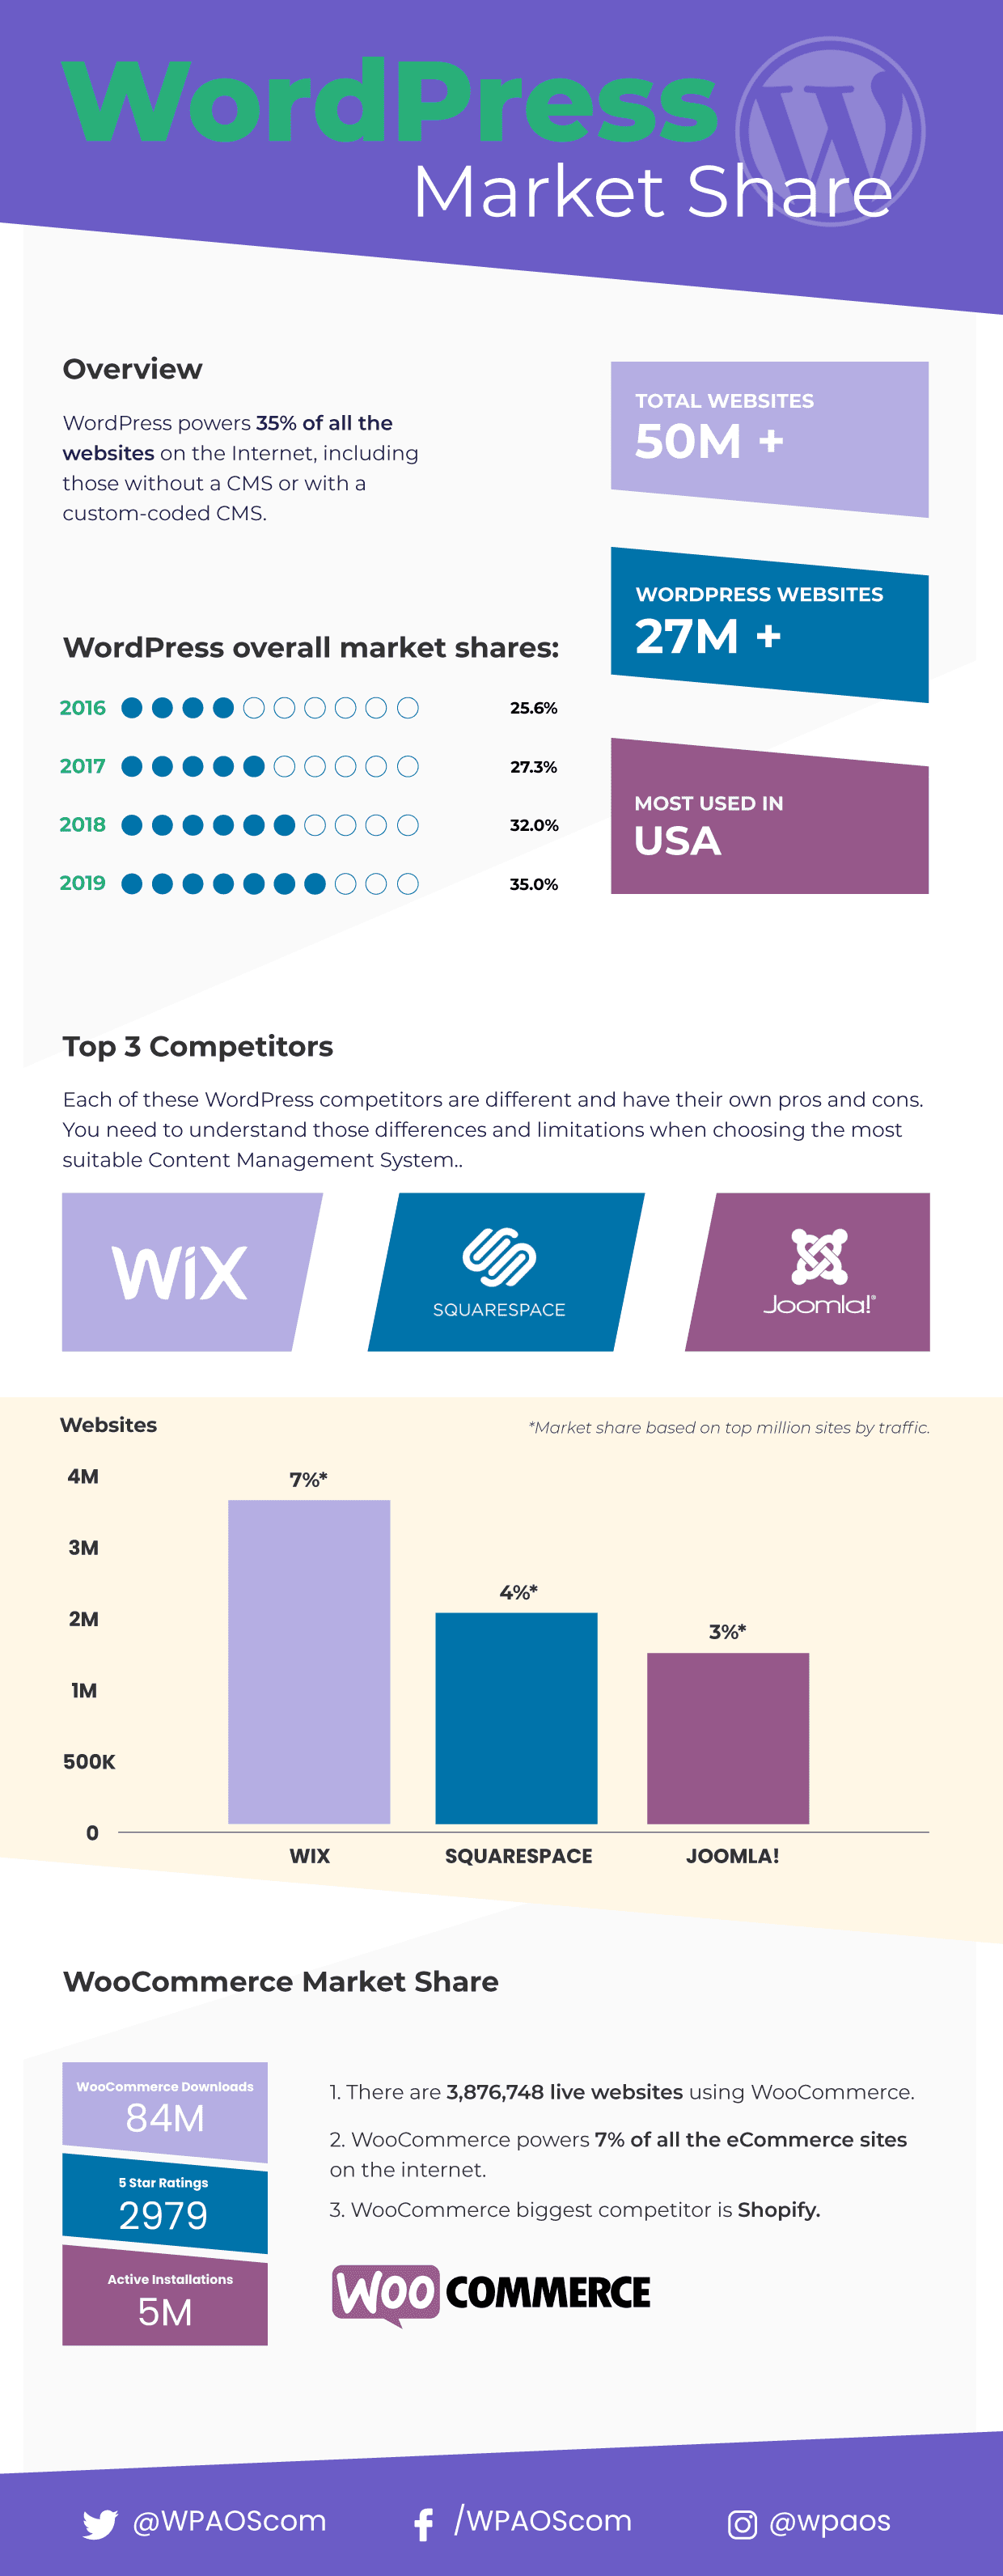 WordPress market share growth over years